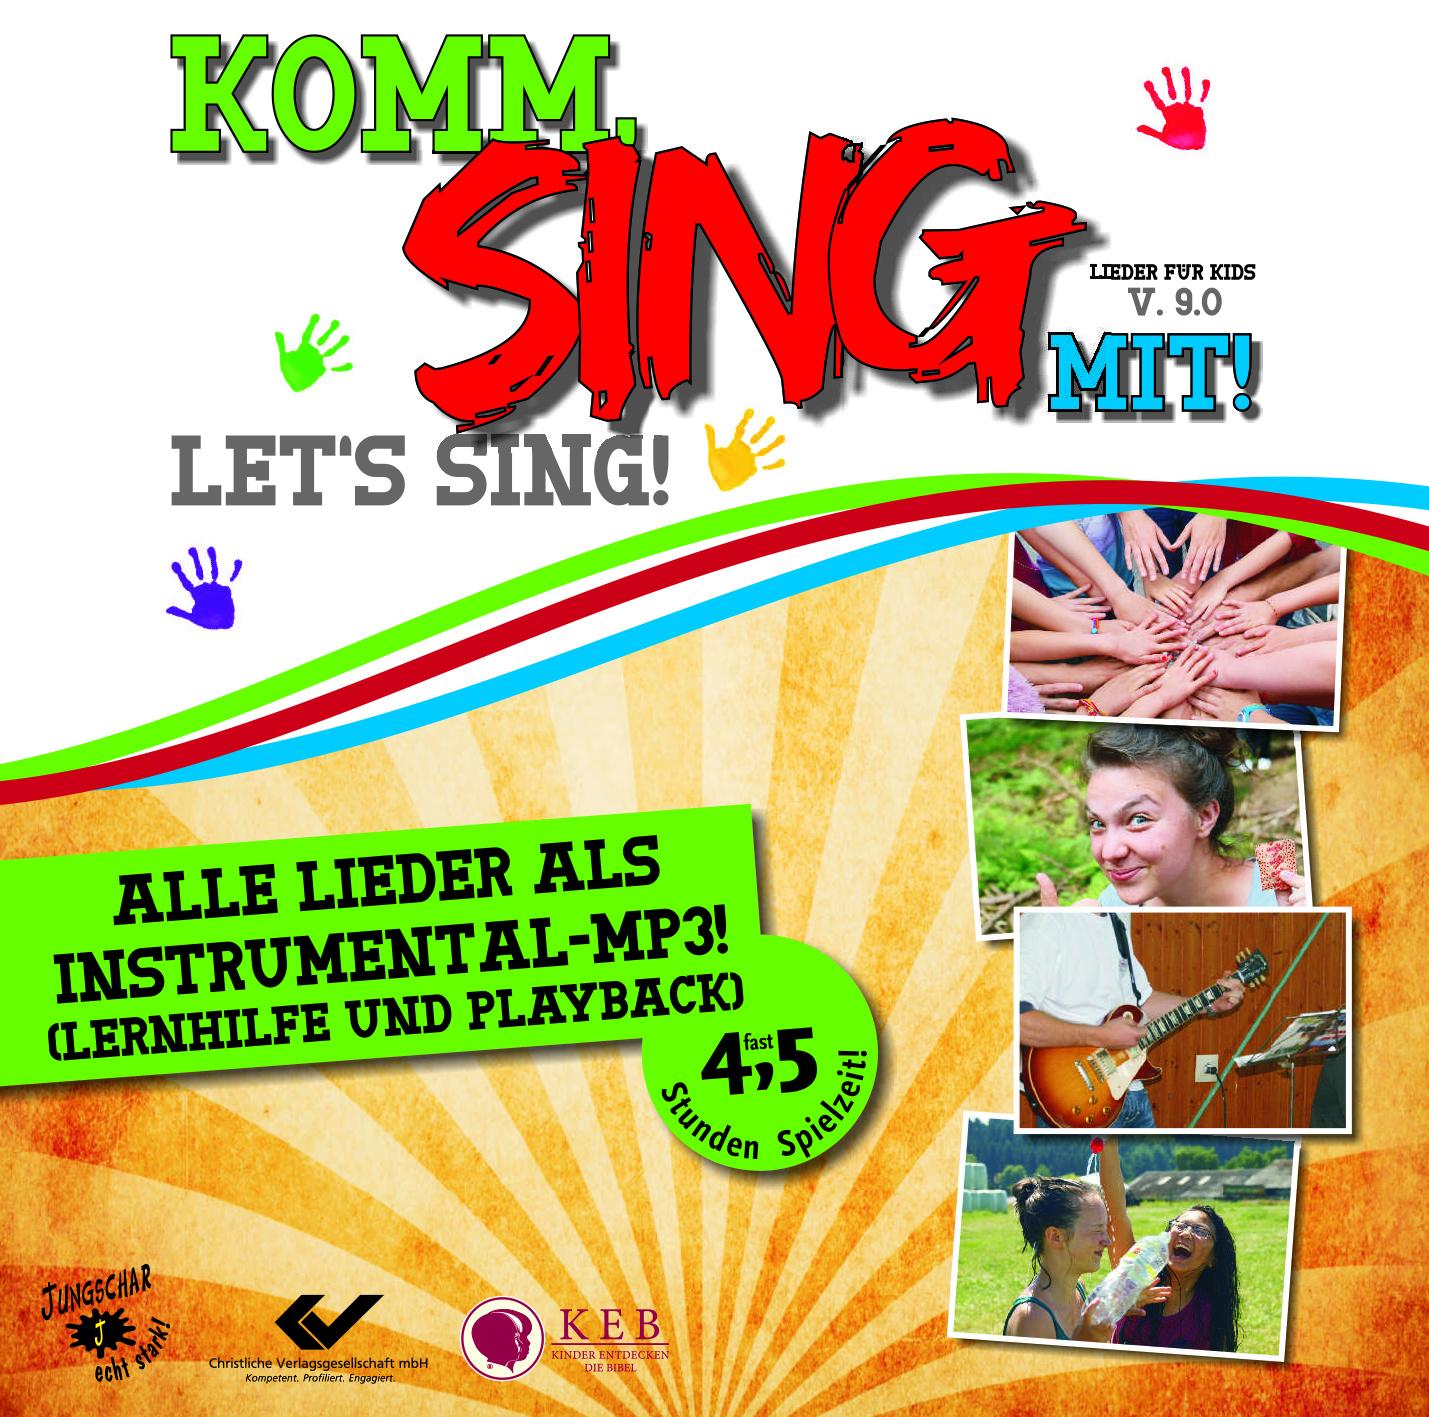 Komm, sing mit! - Instrumental CD